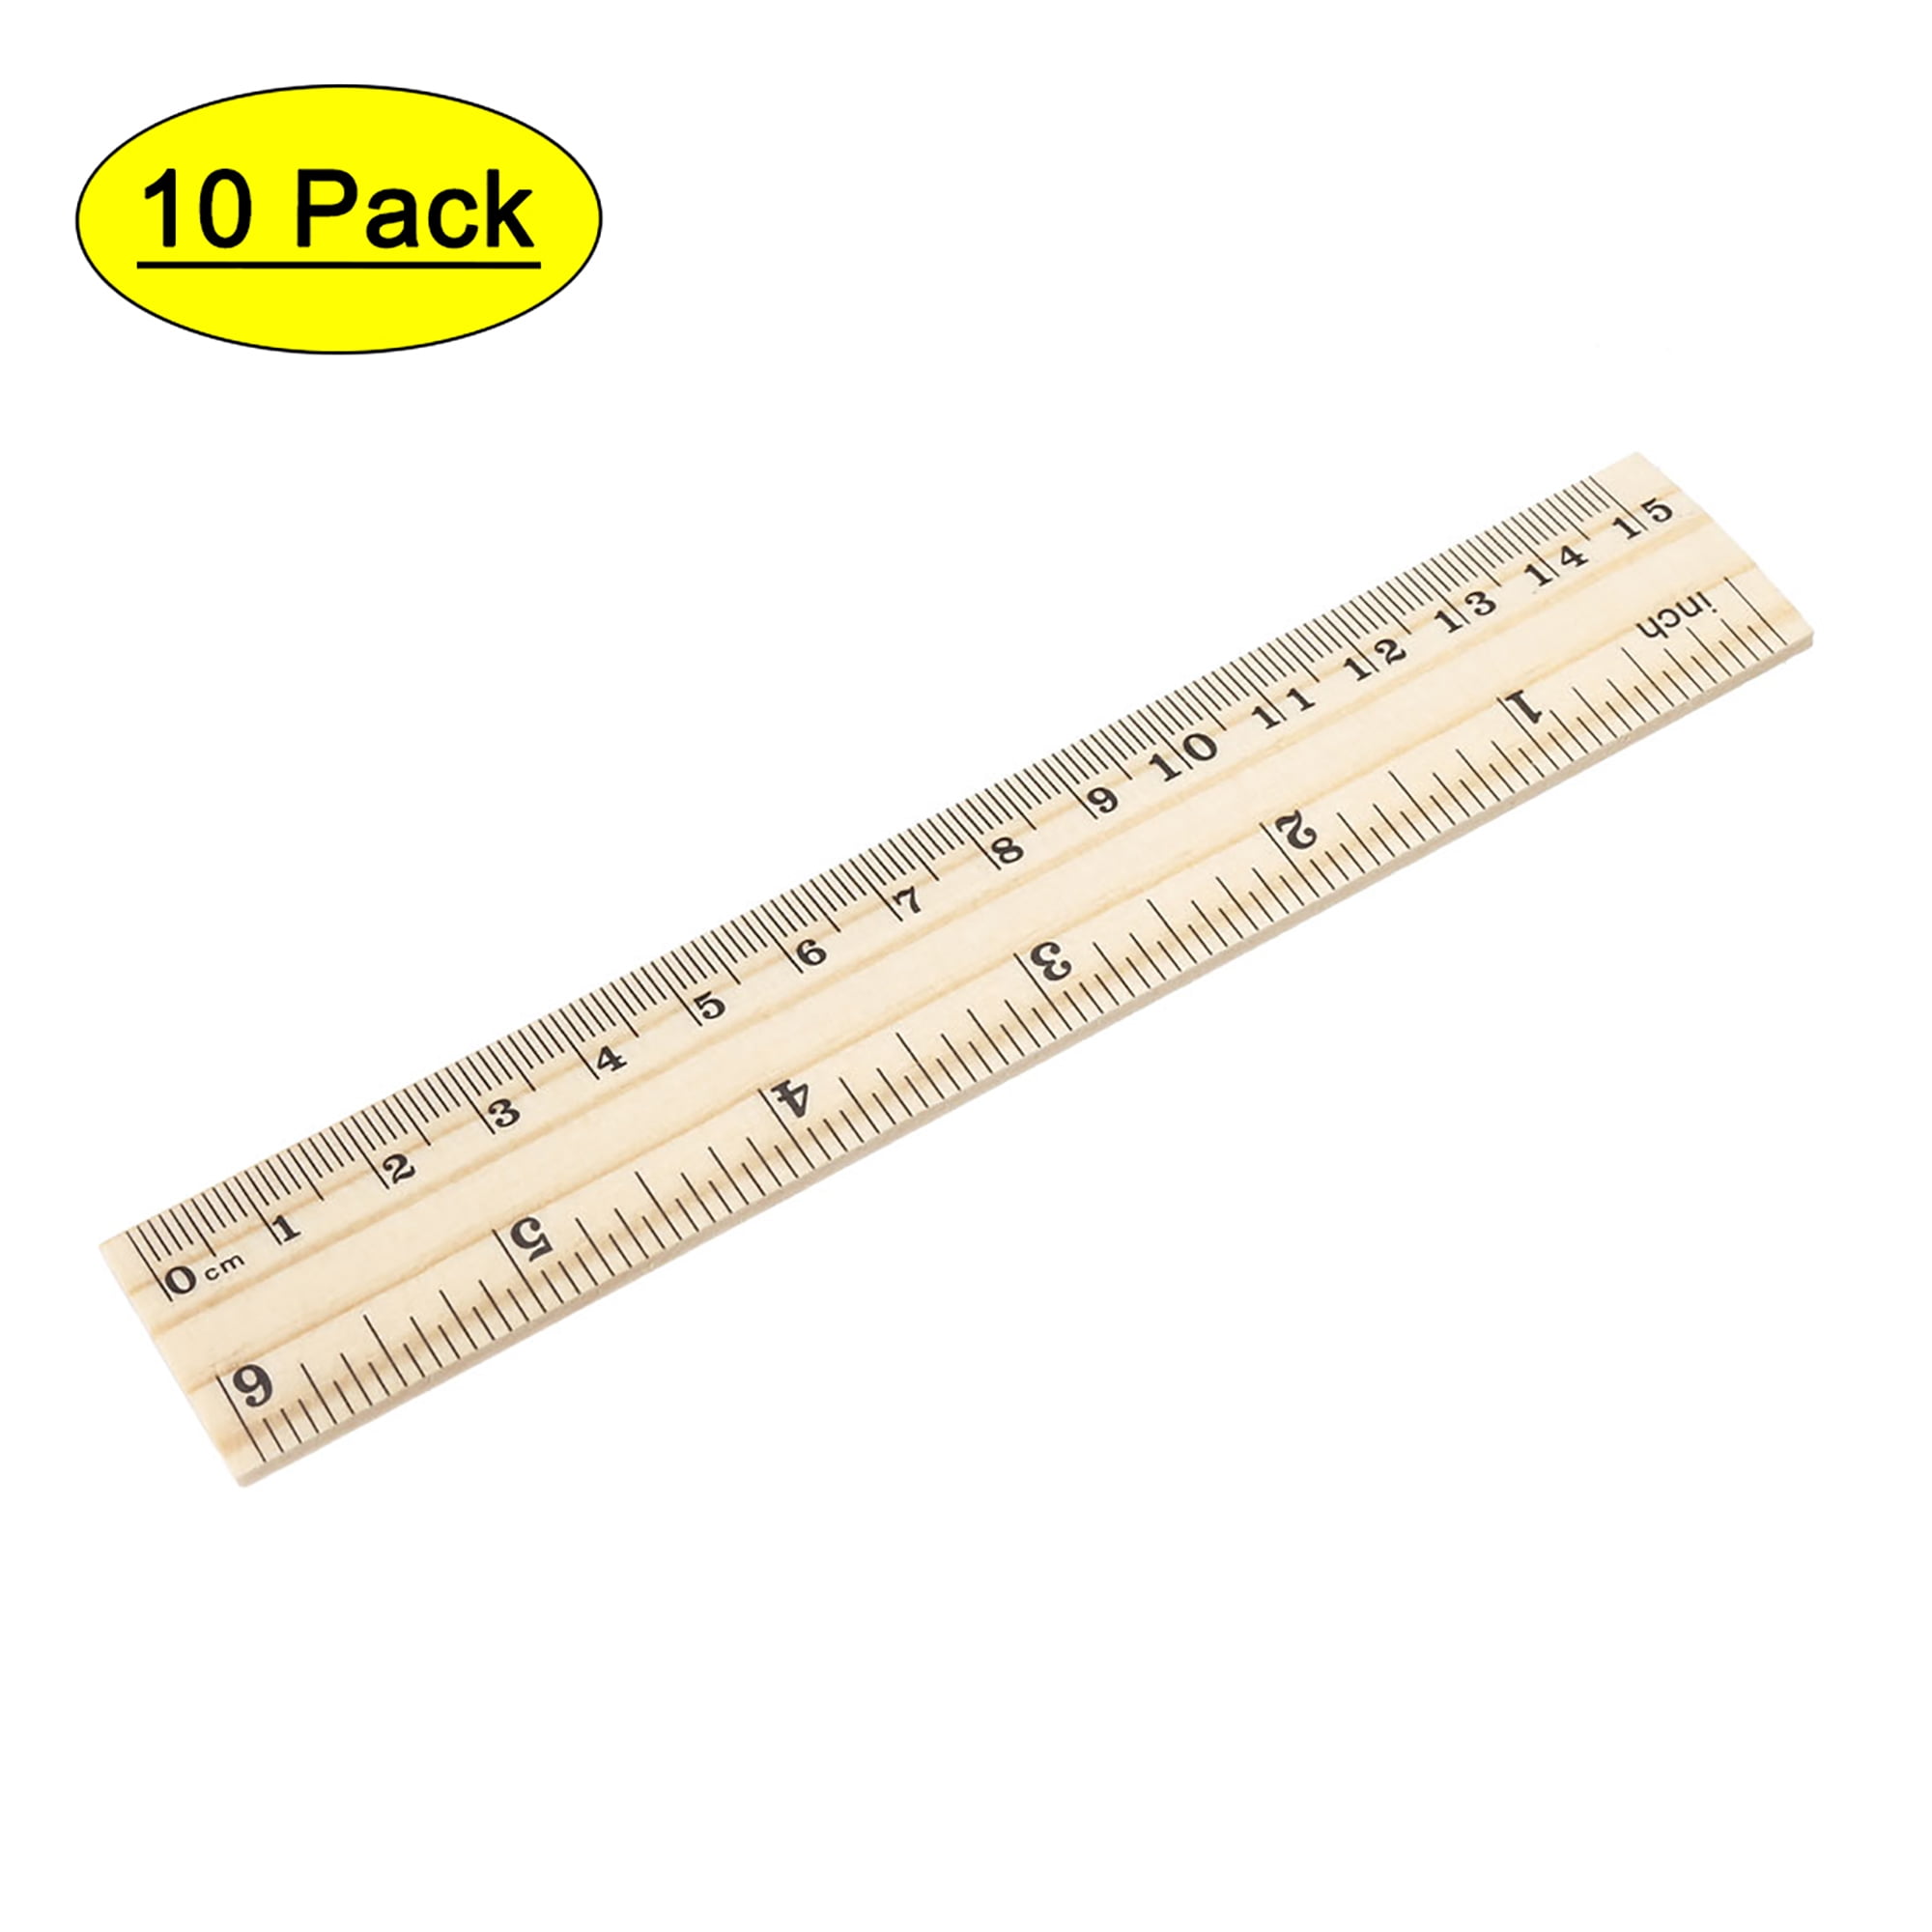 10 Pack Wooden Ruler 12 Inch Rulers Bulk Wood Measuring Ruler